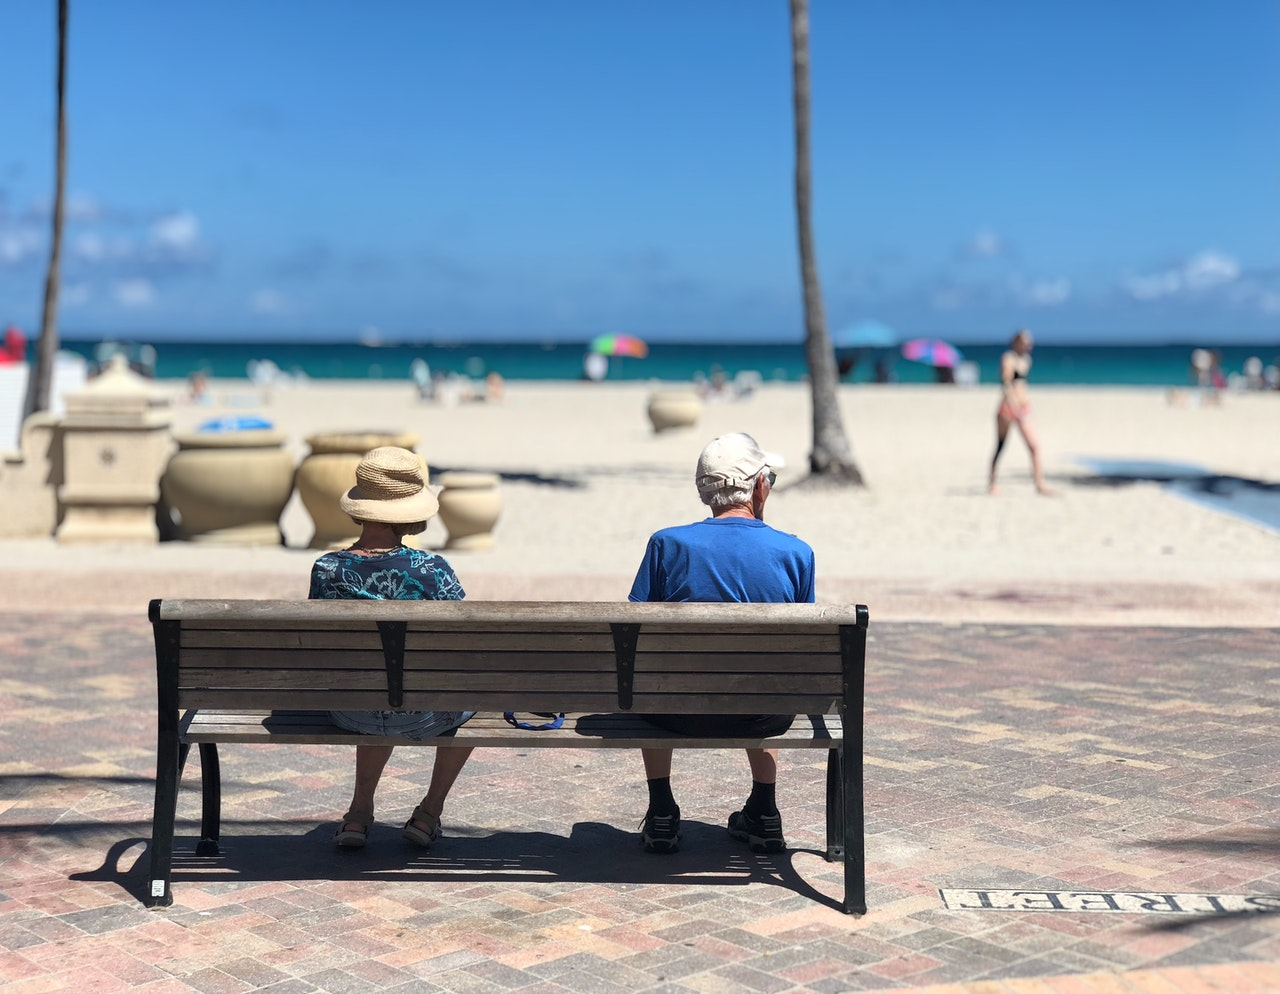 The Best Retirement Communities in Destin, FL